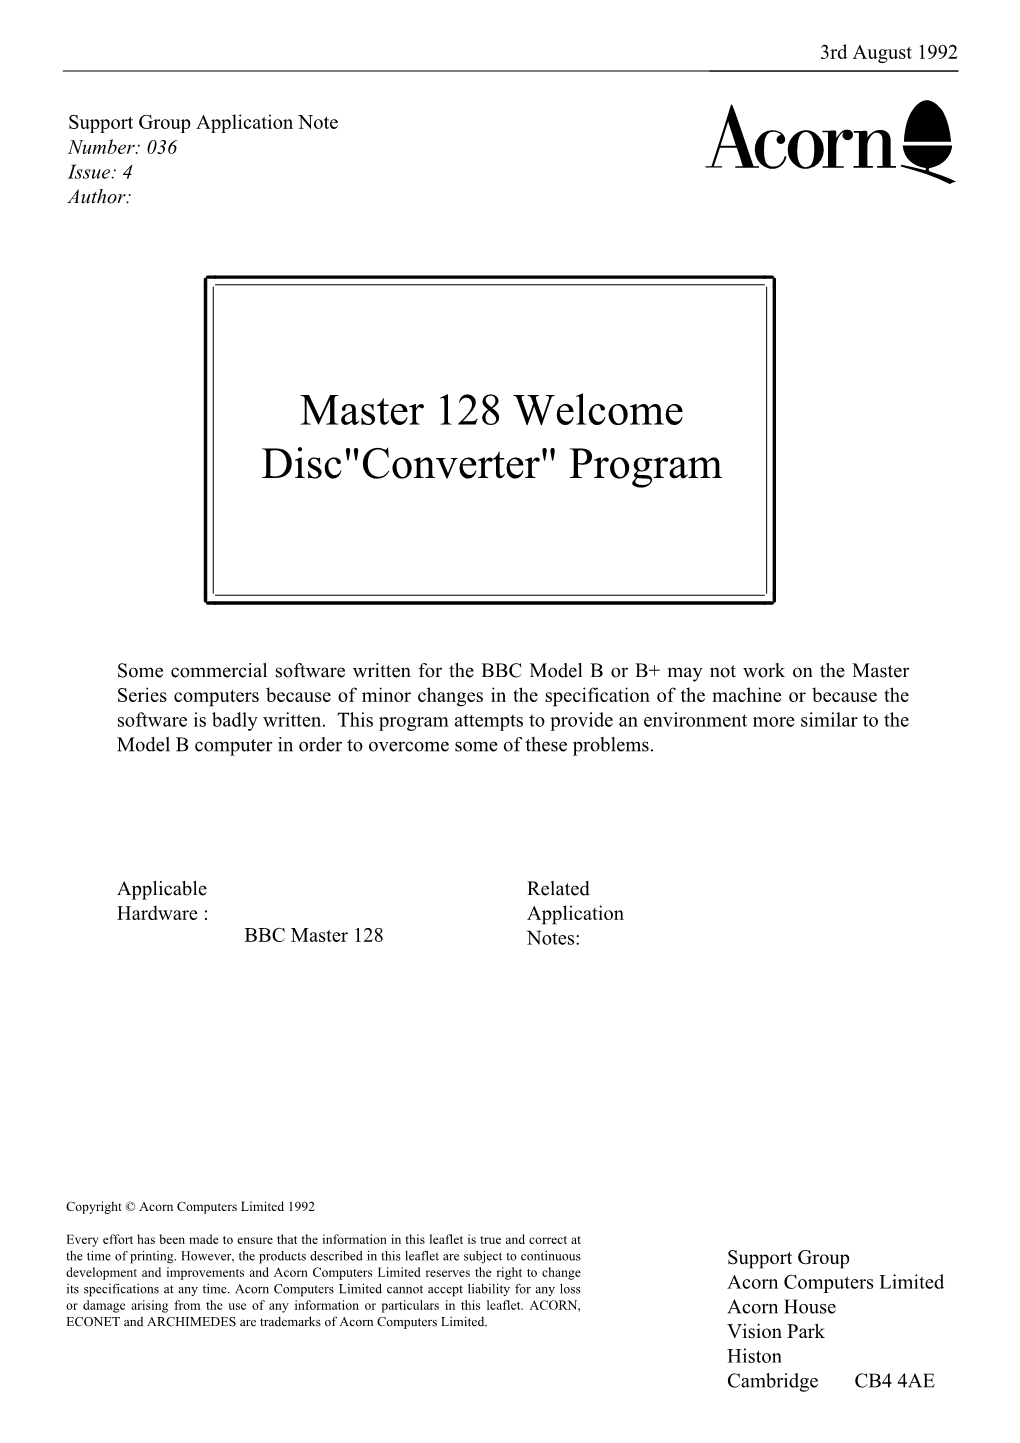 BBC Master 128 Welcome Disc Converter Program